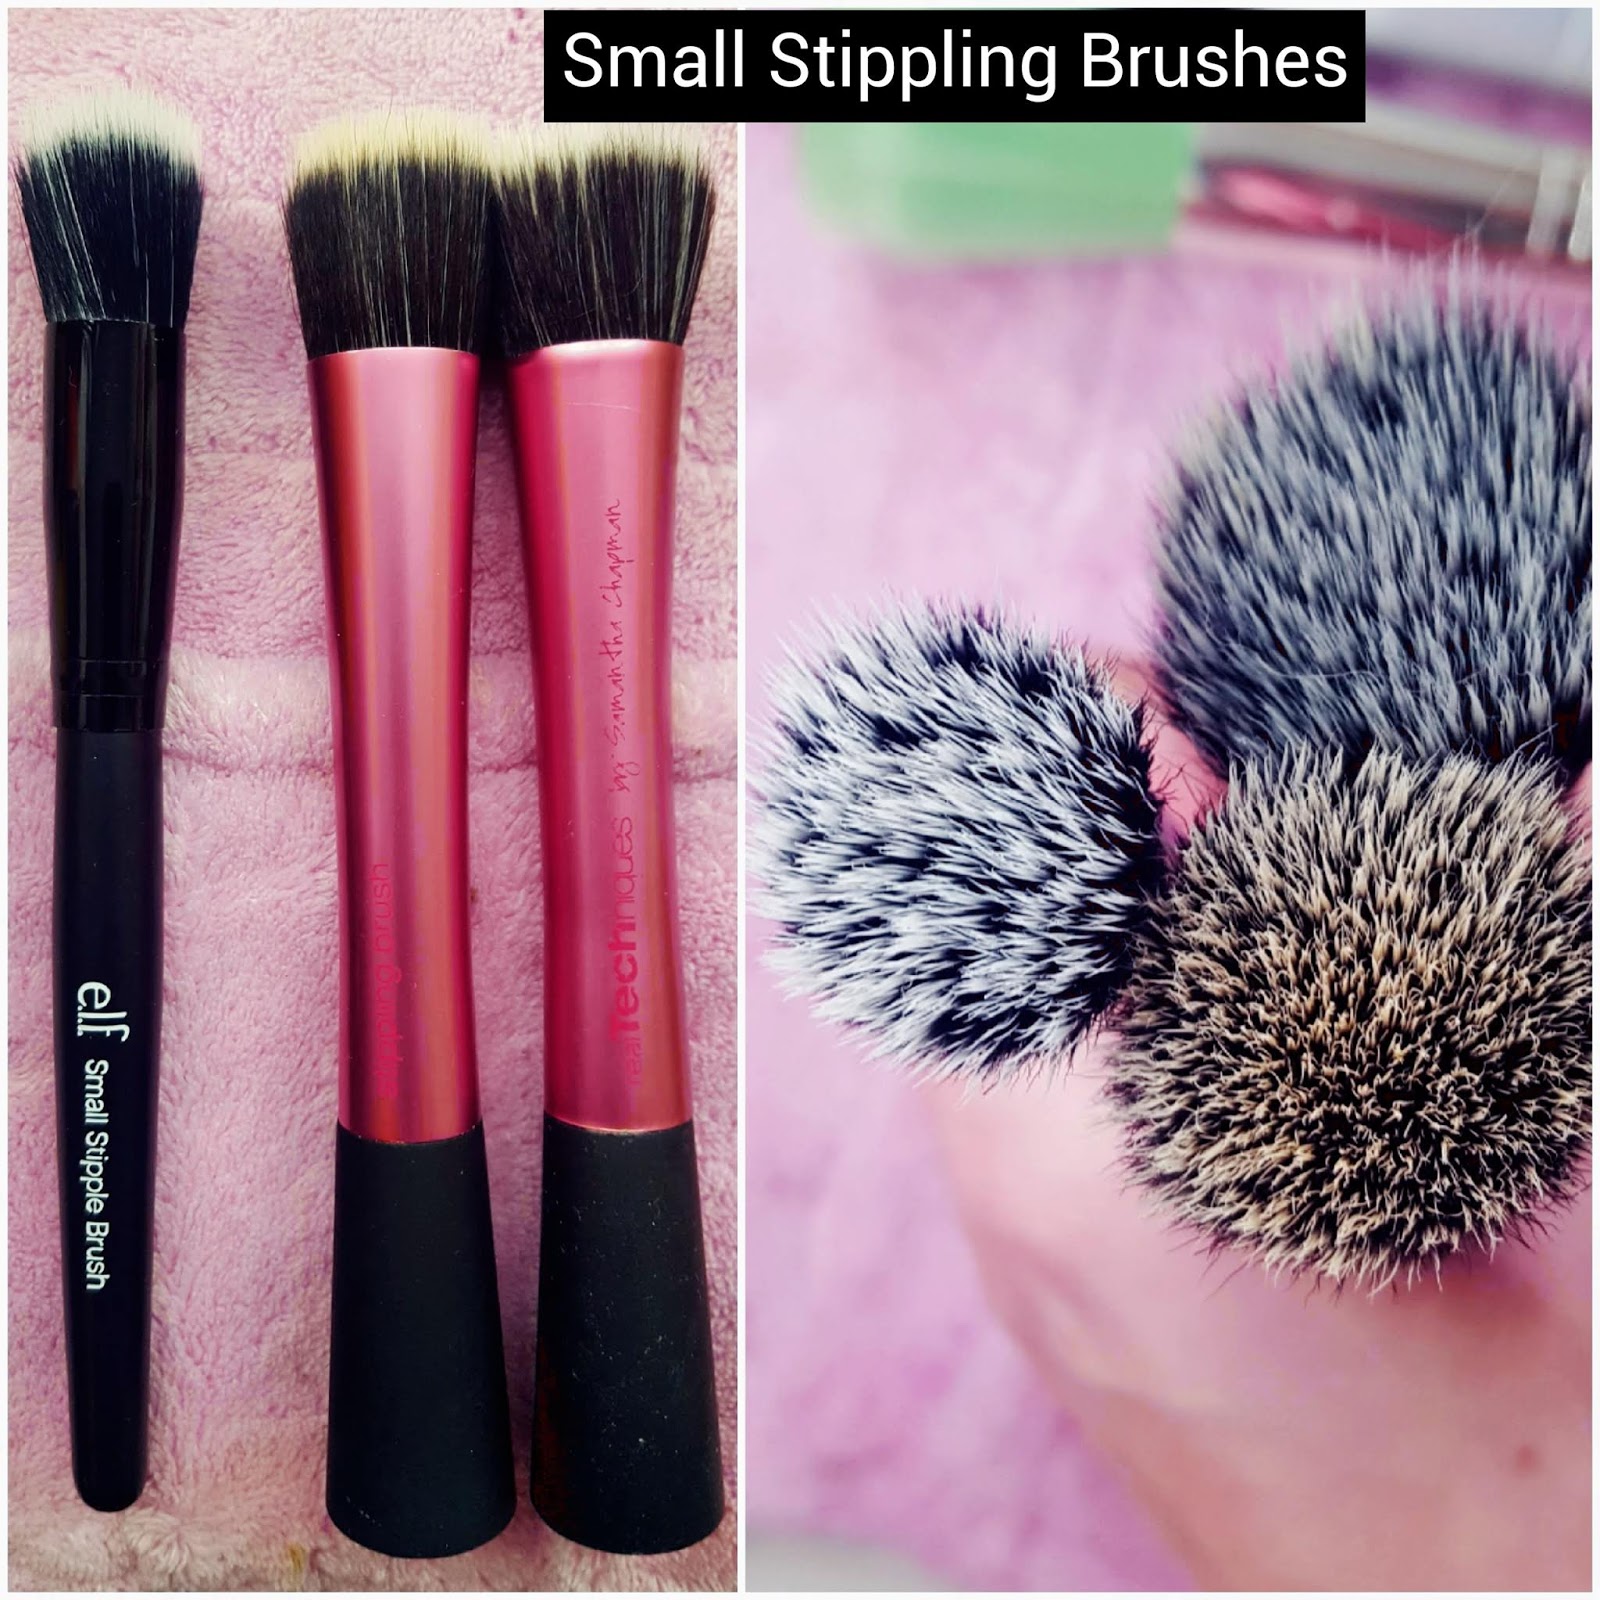 Stipple Brush: Small